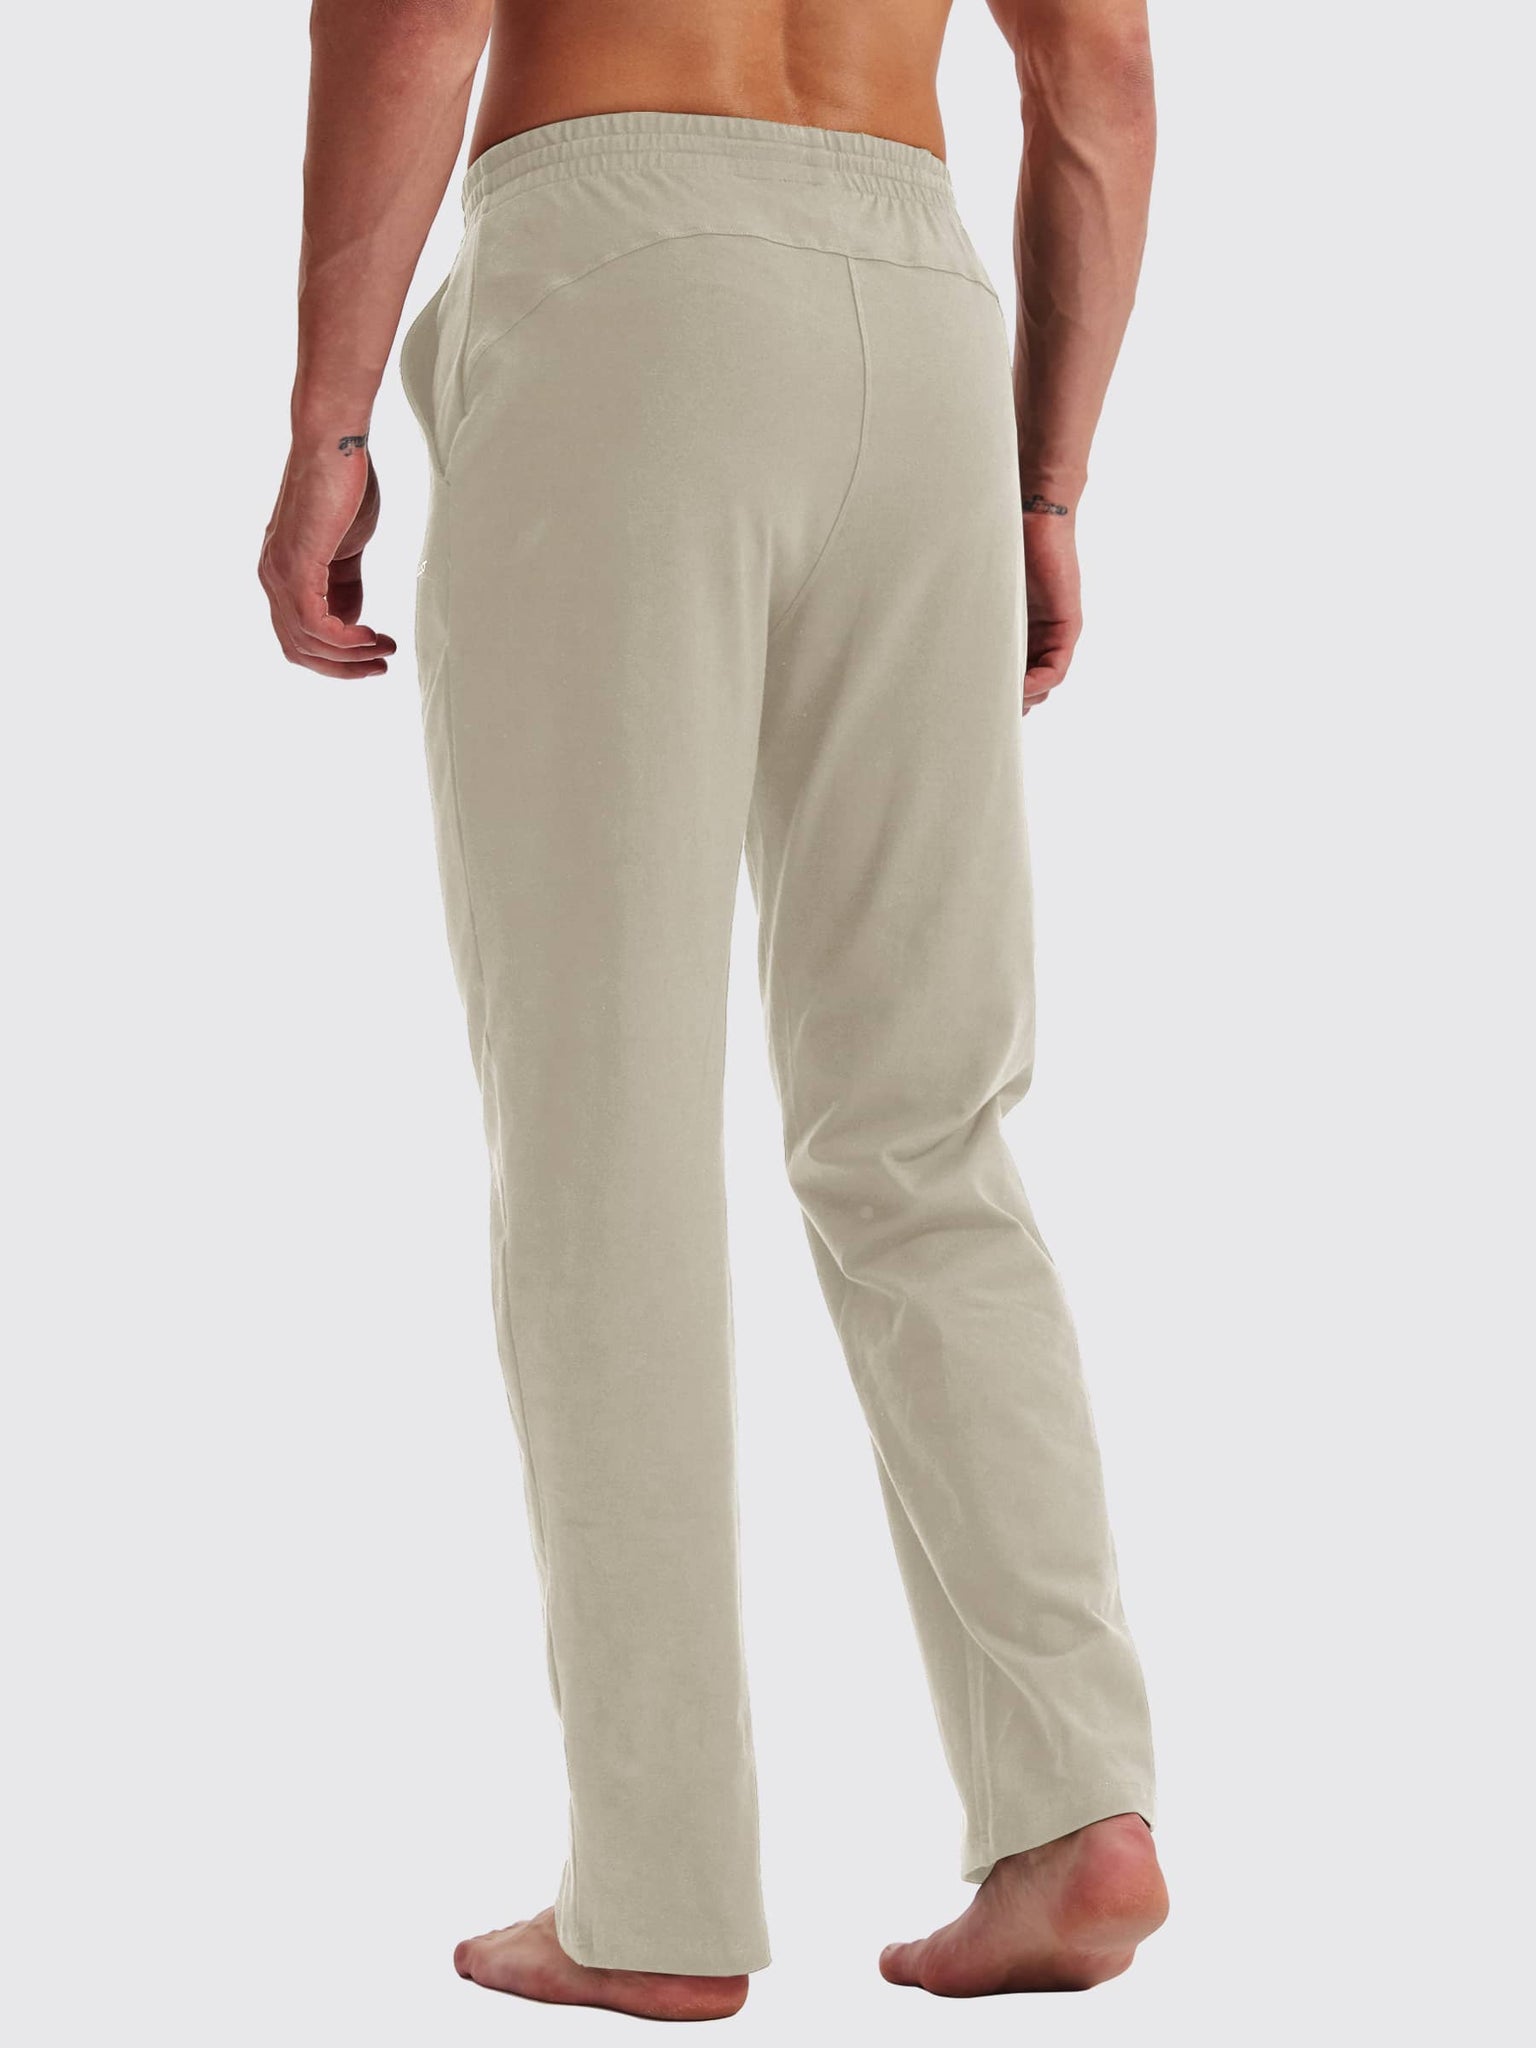 Men's Cotton Yoga Balance Sweatpants_Khaki_model5